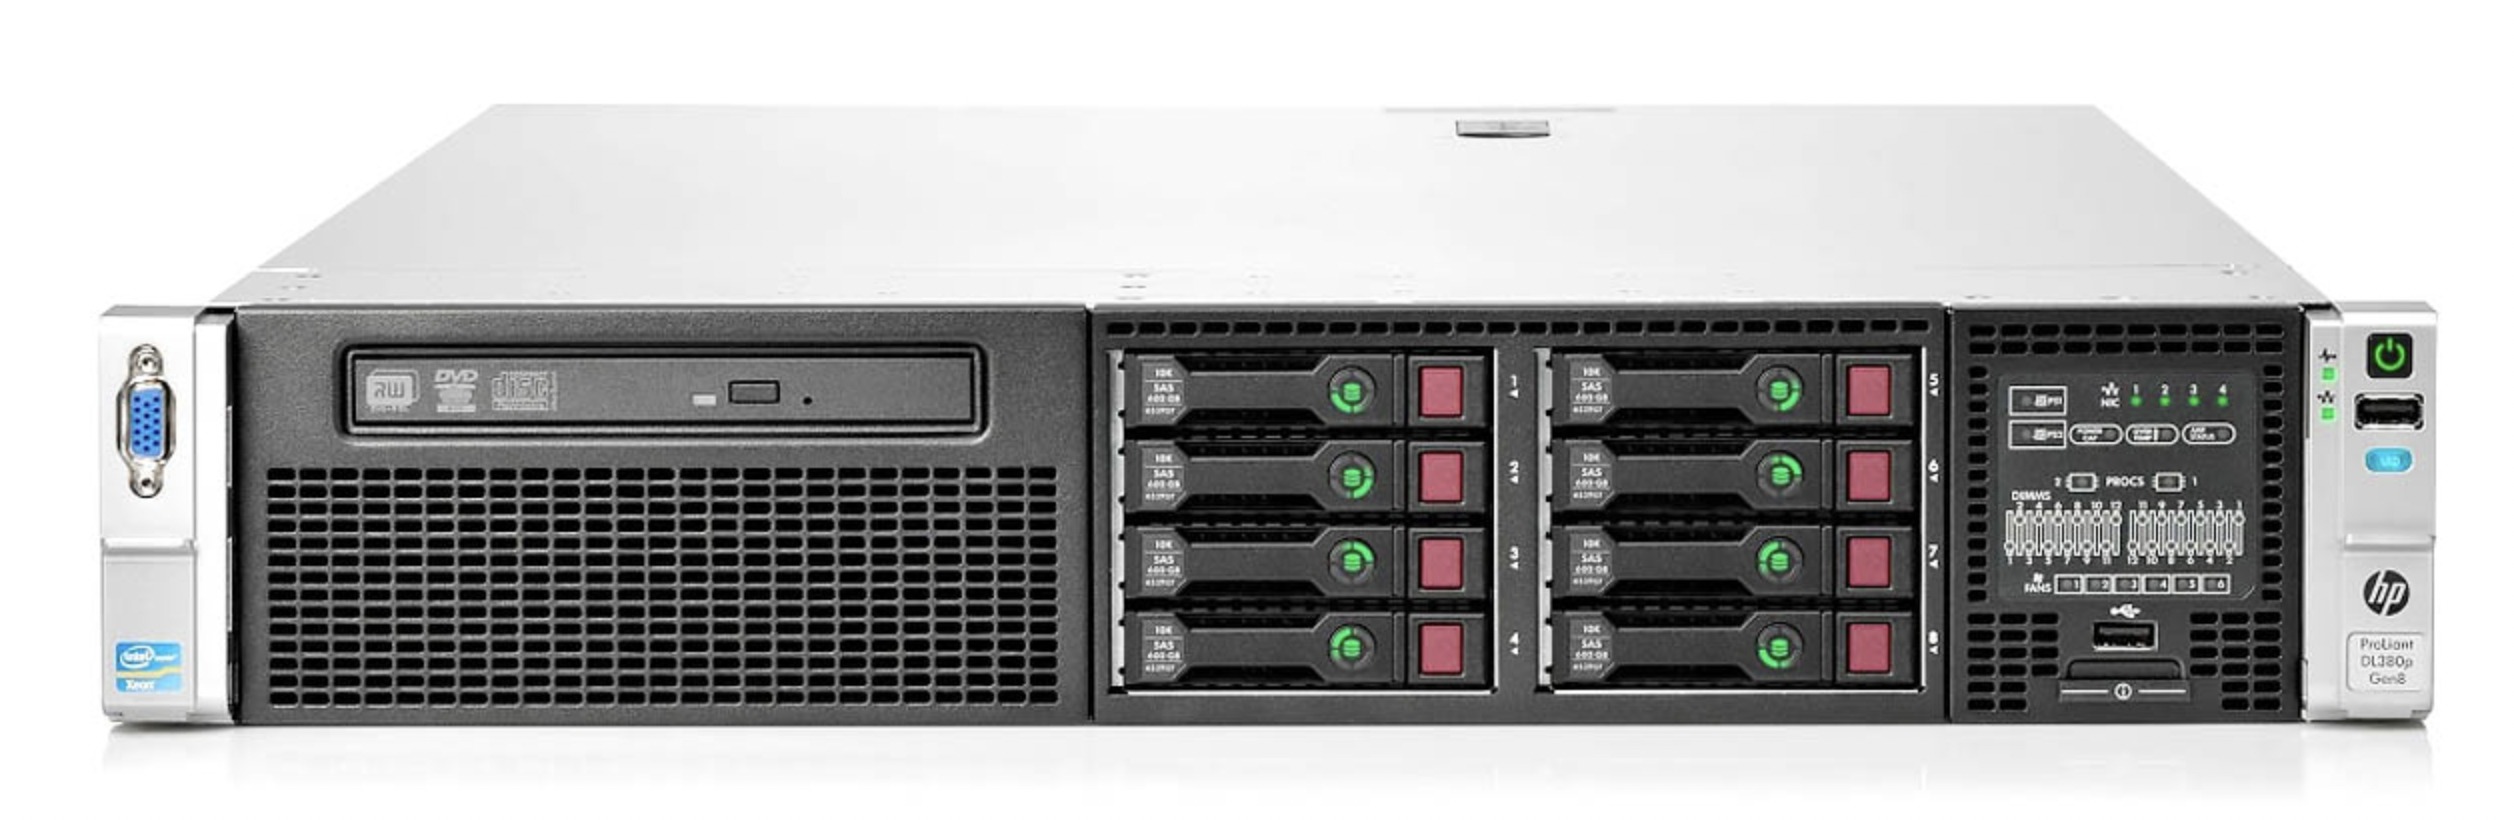 HP Proliant DL380p Gen8 Server